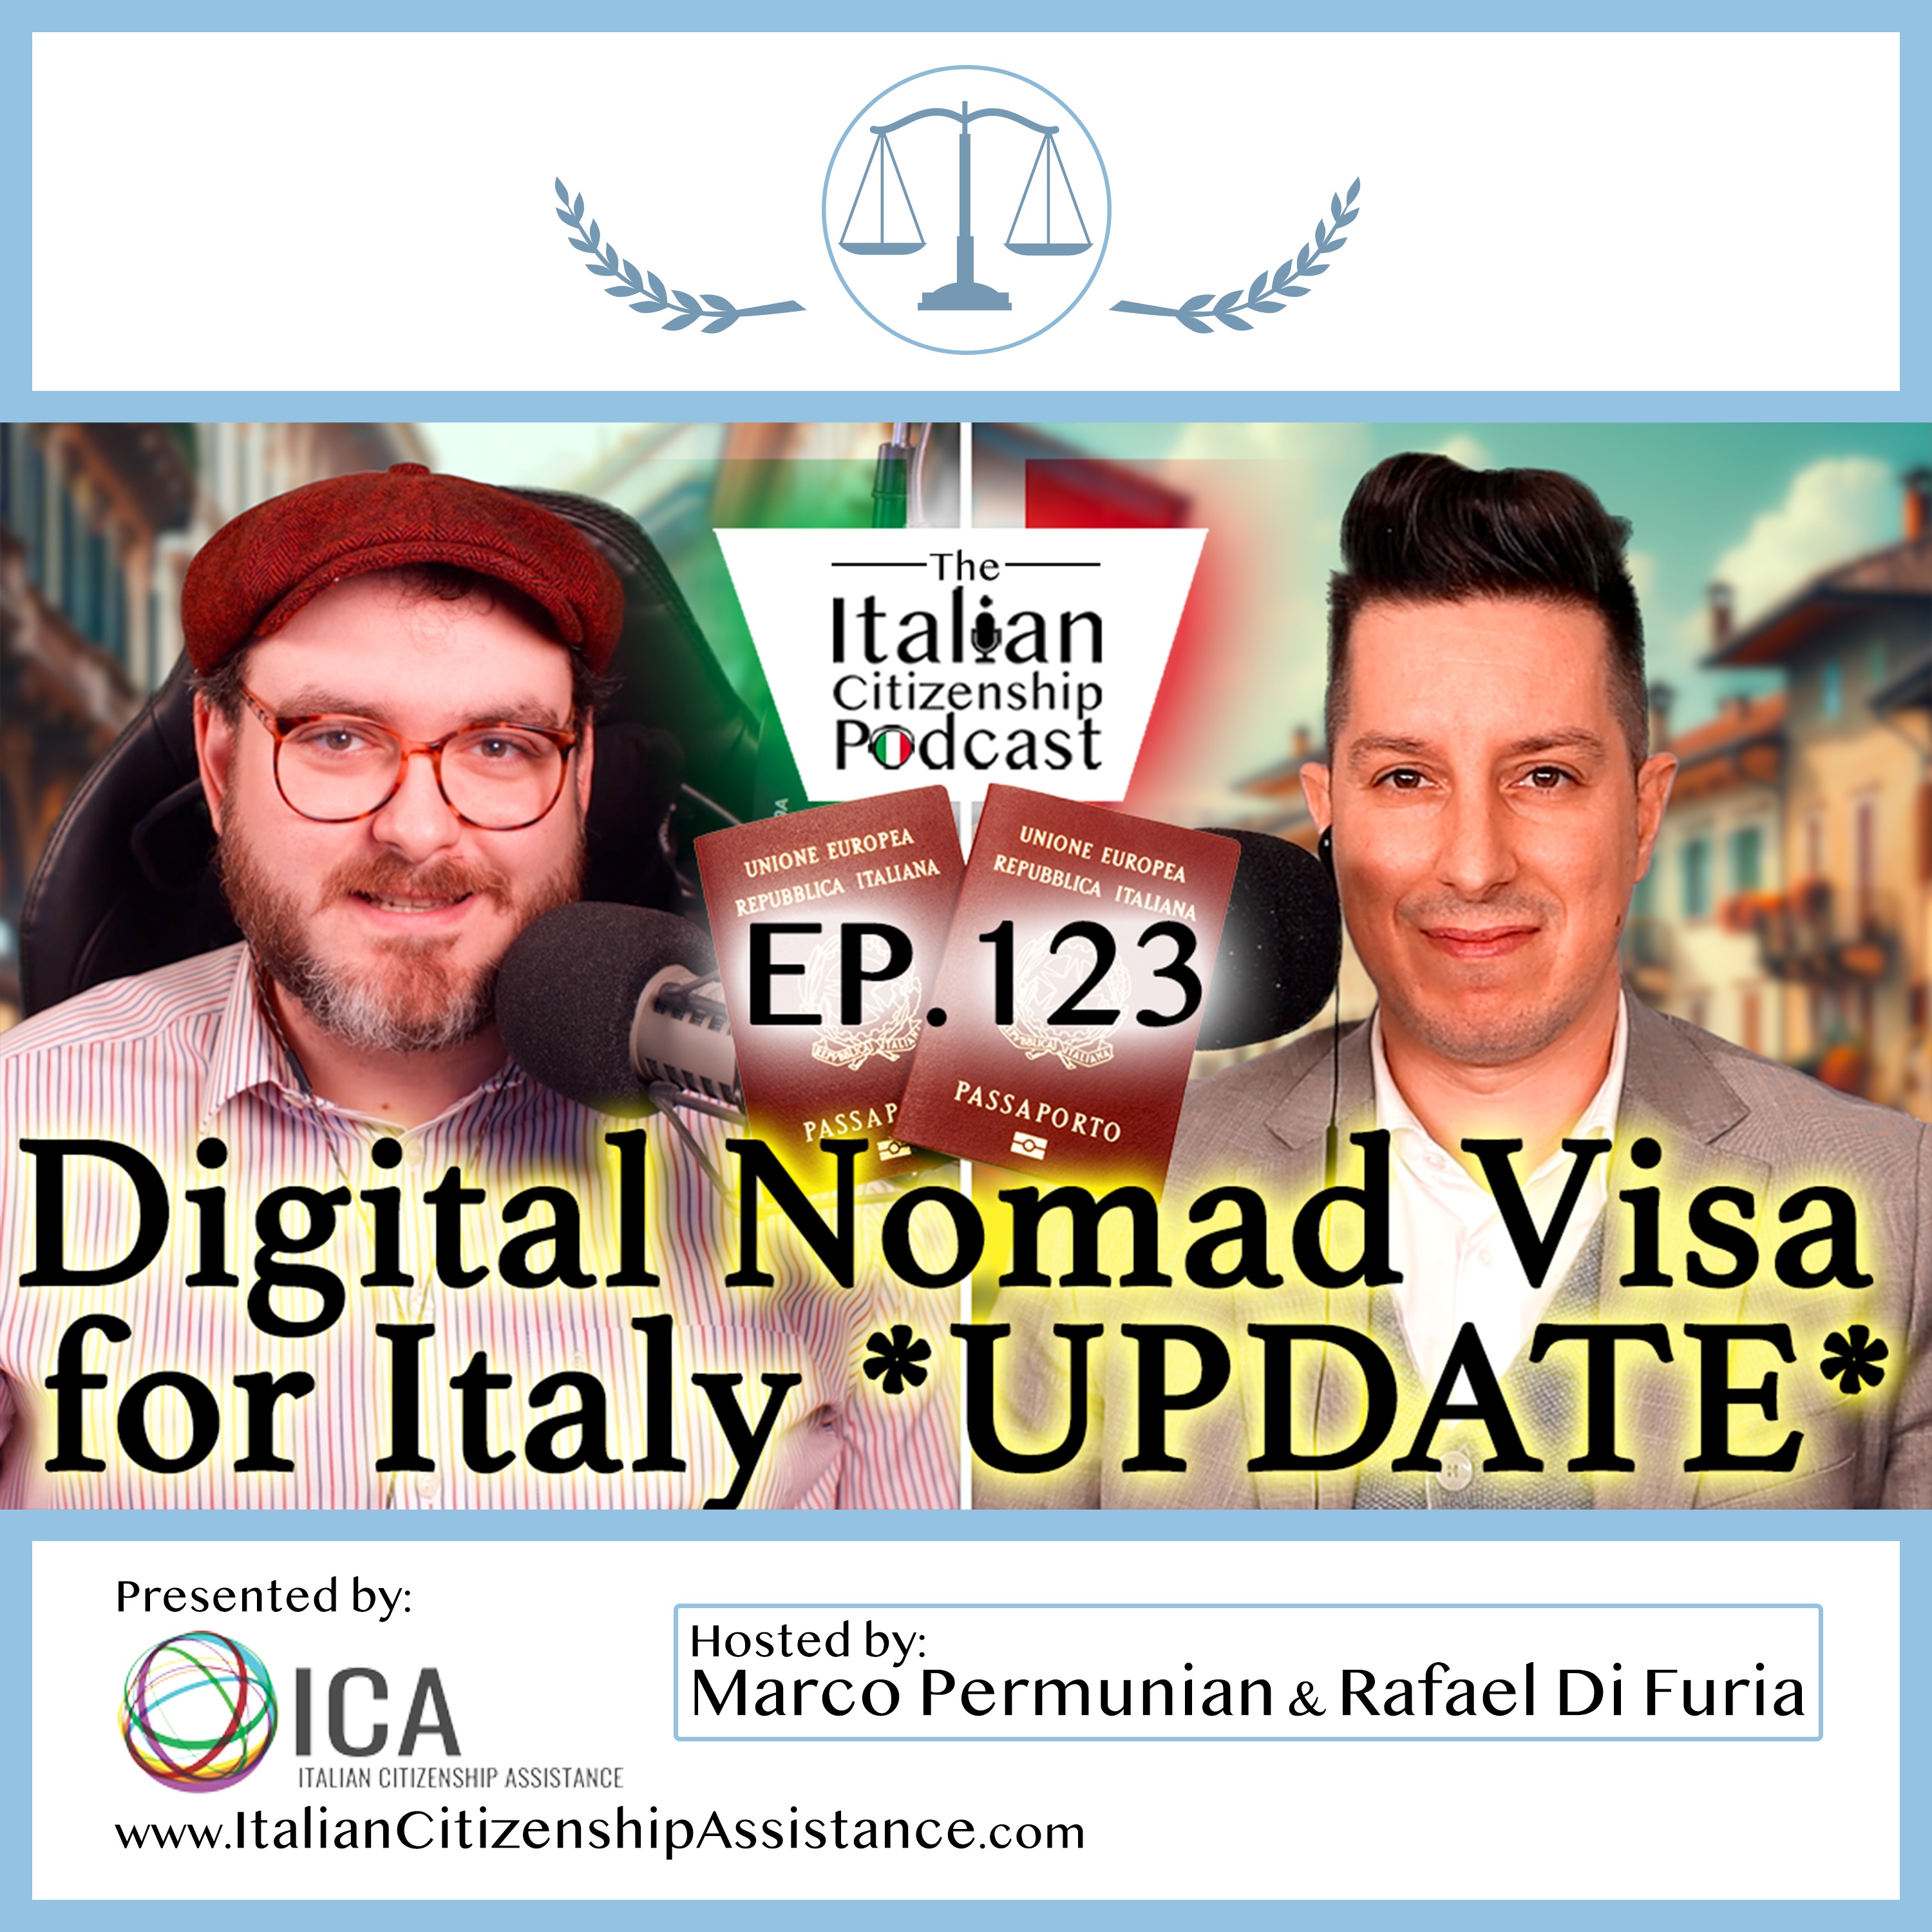 Italy's Digital Nomad Visa *UPDATE*